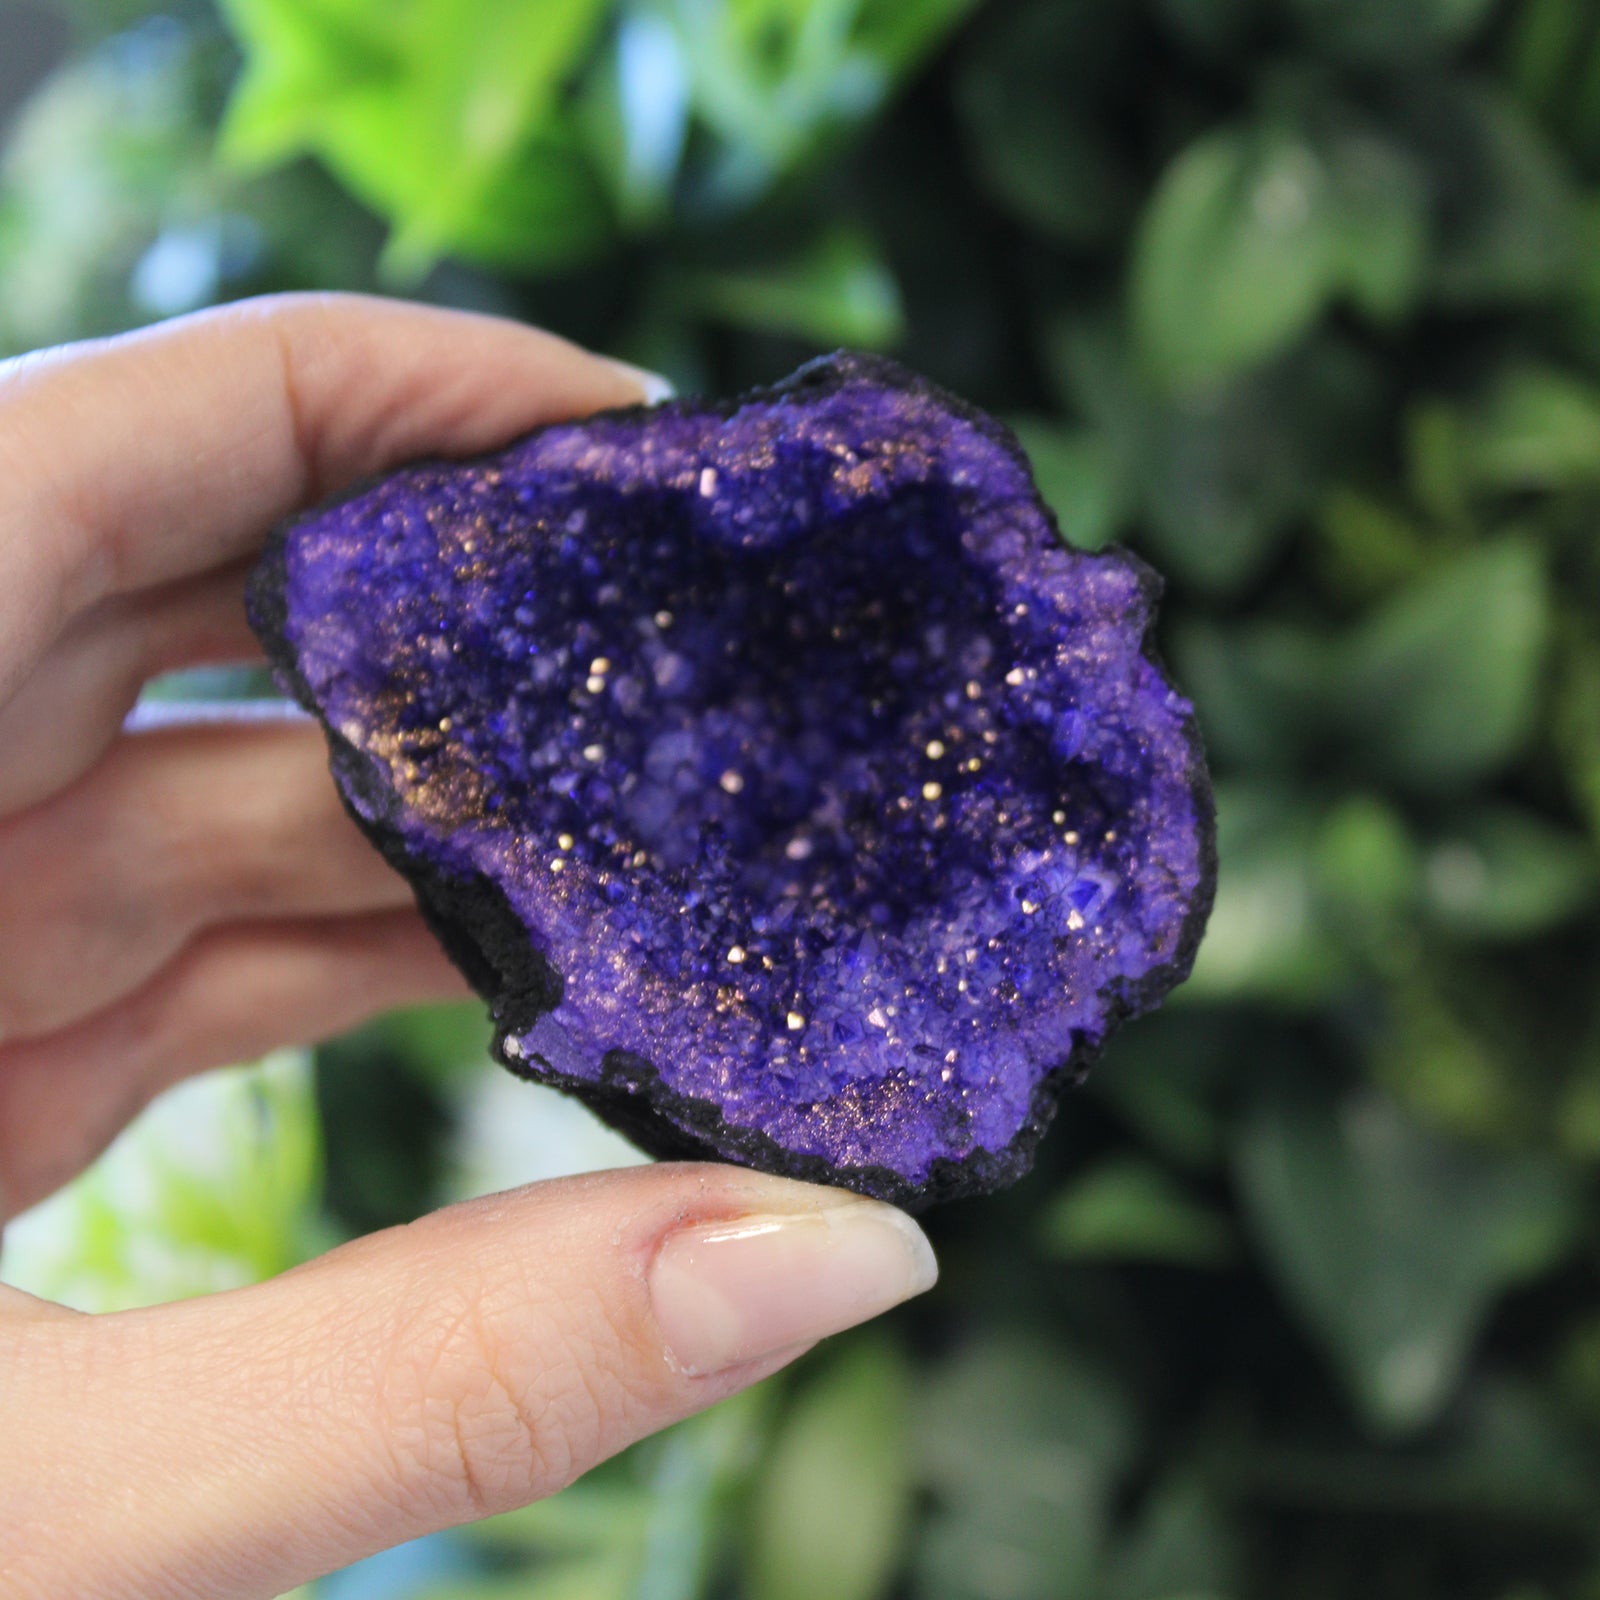 Colored Calcite Geodes - Black Rock - Turquoise / Purple - CosmicSerenityShop.com